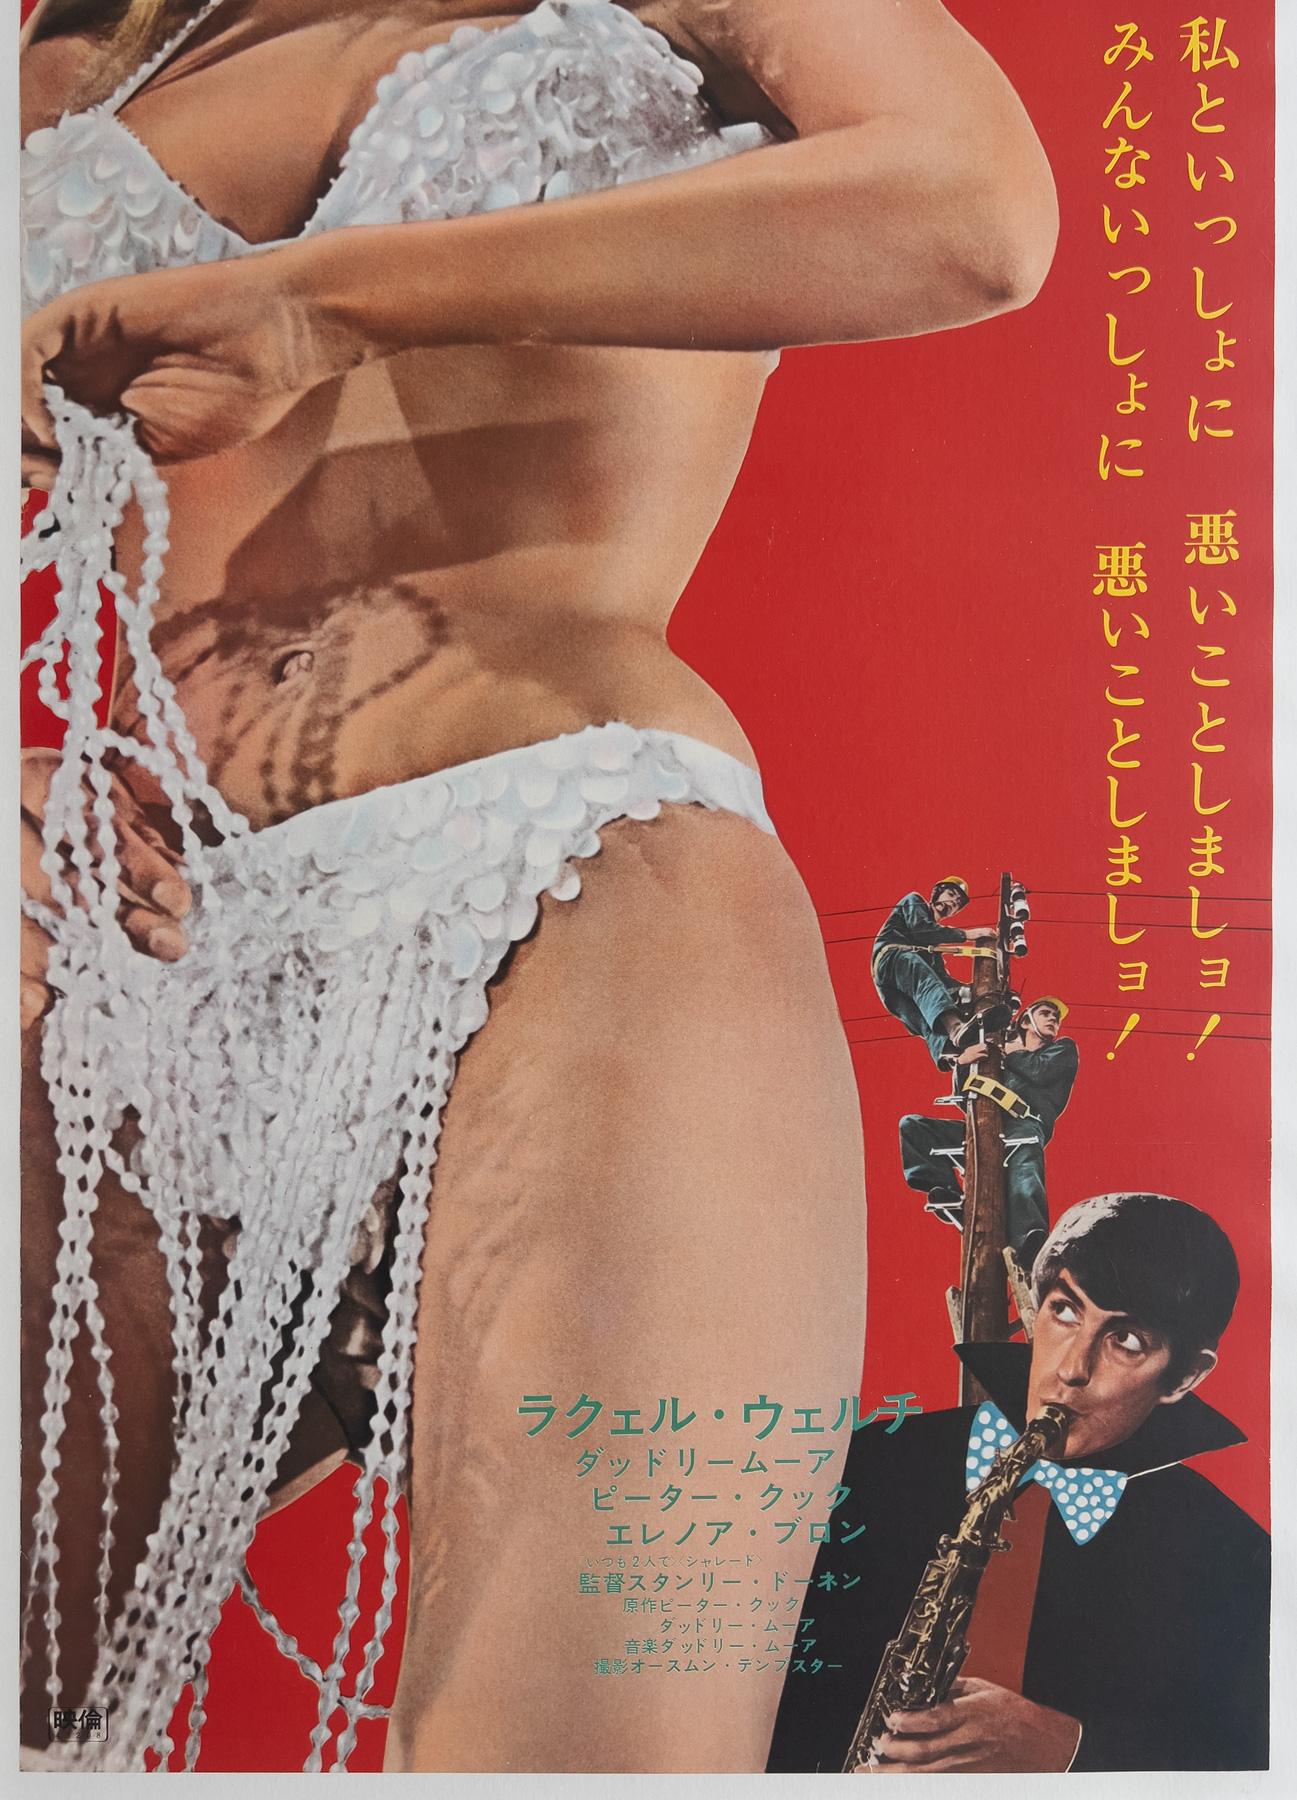 Paper Bedazzled 1968 Original Japanese Tatekan 2 Sheet Film Poster For Sale